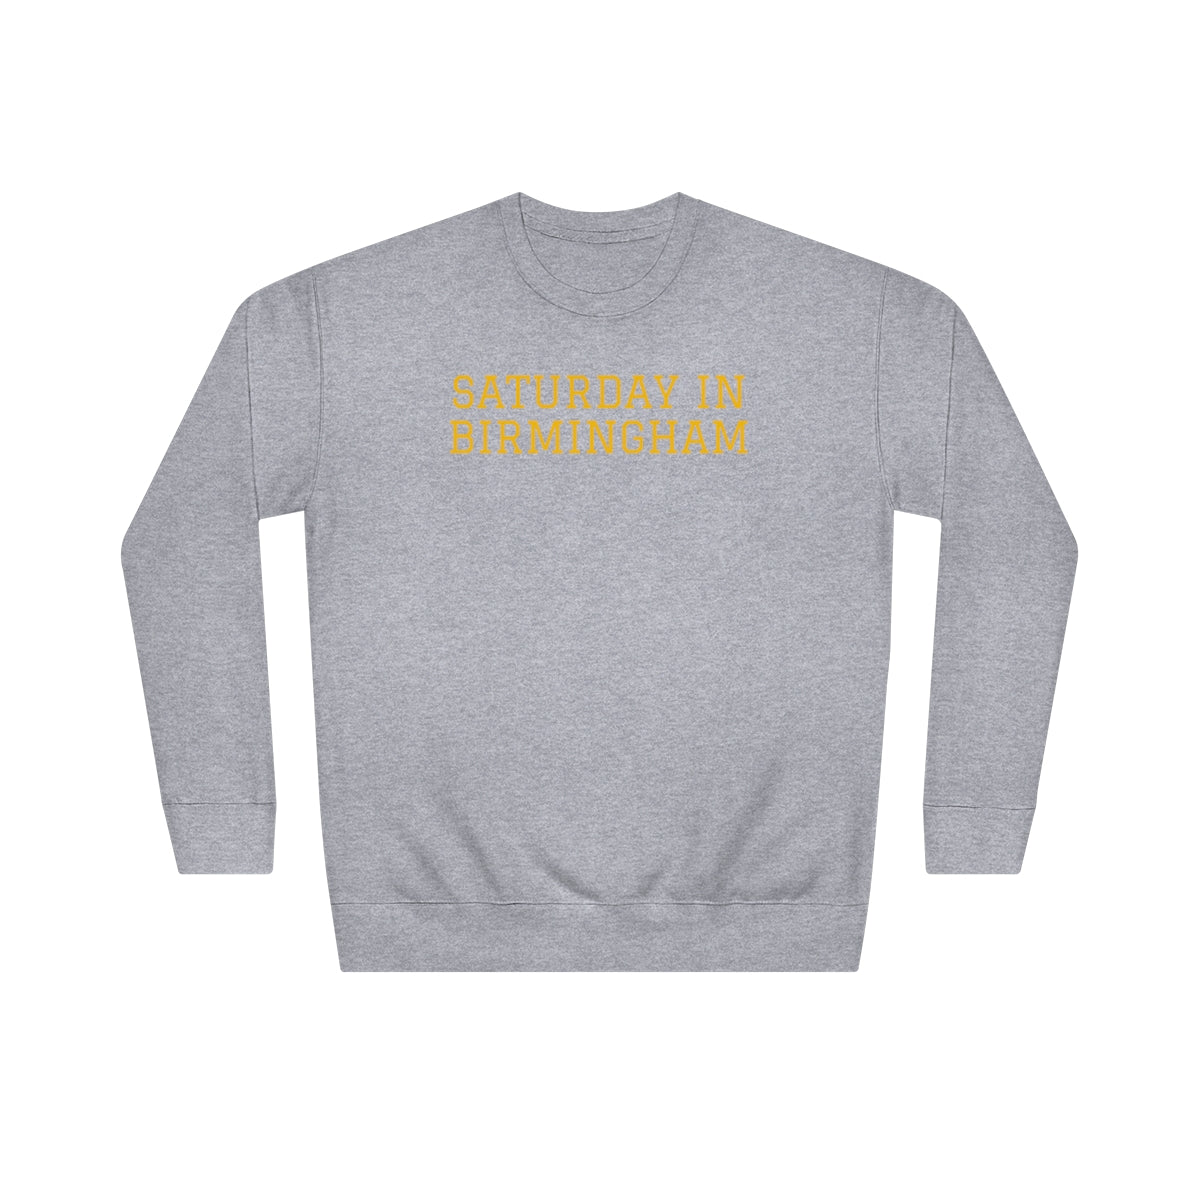 Birmingham Southern Crew Sweatshirt - GG - CH